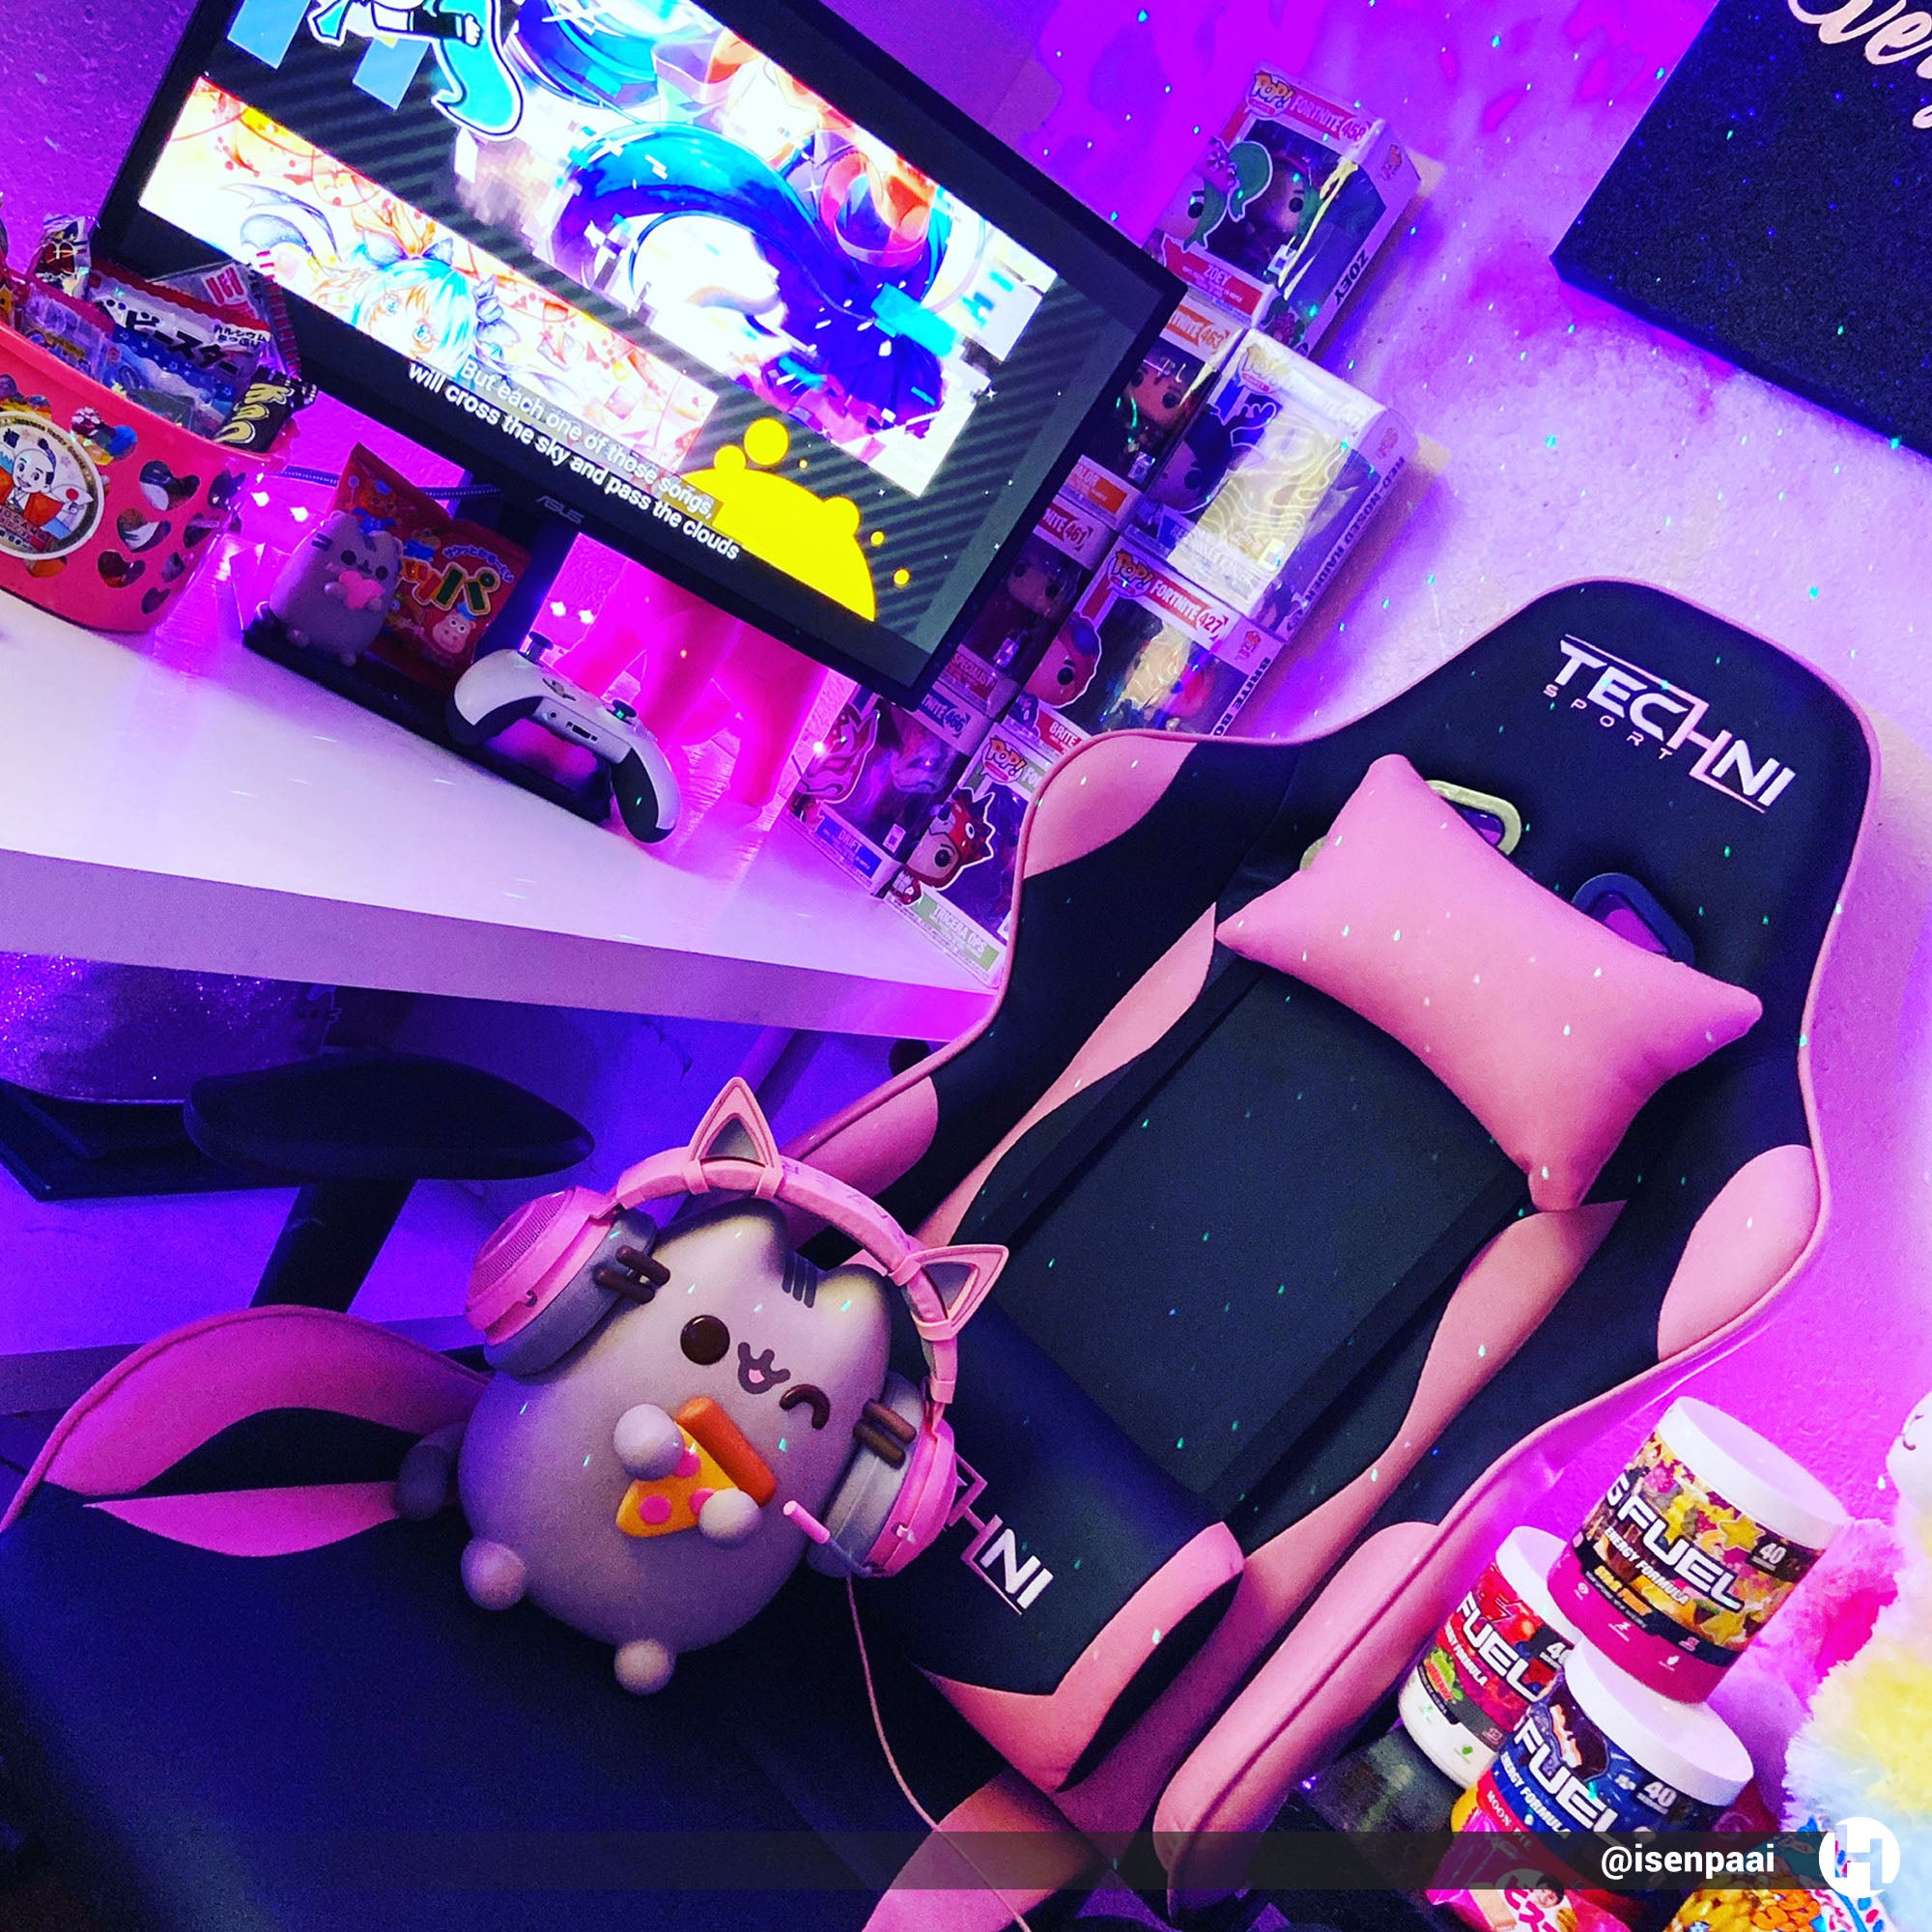 Best pink gaming chair – KXAN Austin